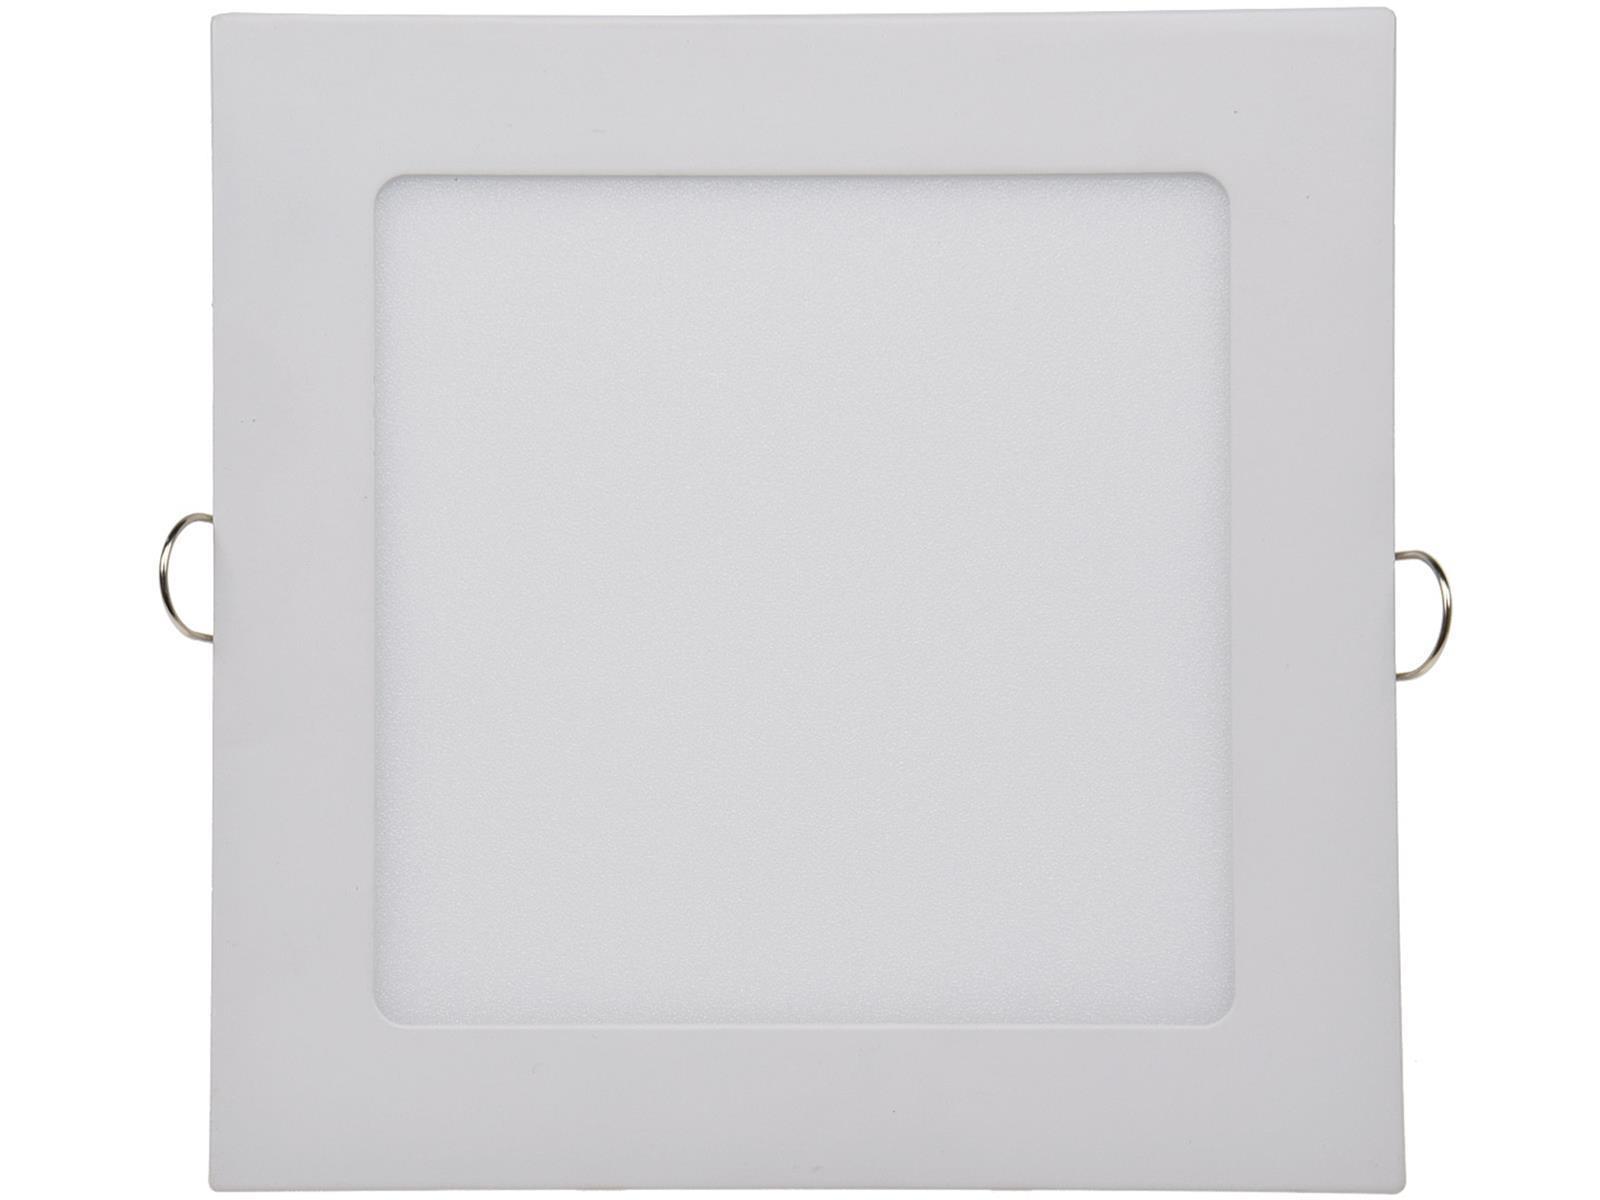 LED Licht-Panel "QCP-17Q", 17x17cm230V, 12W, 870 Lumen,4200K / neutralweiß